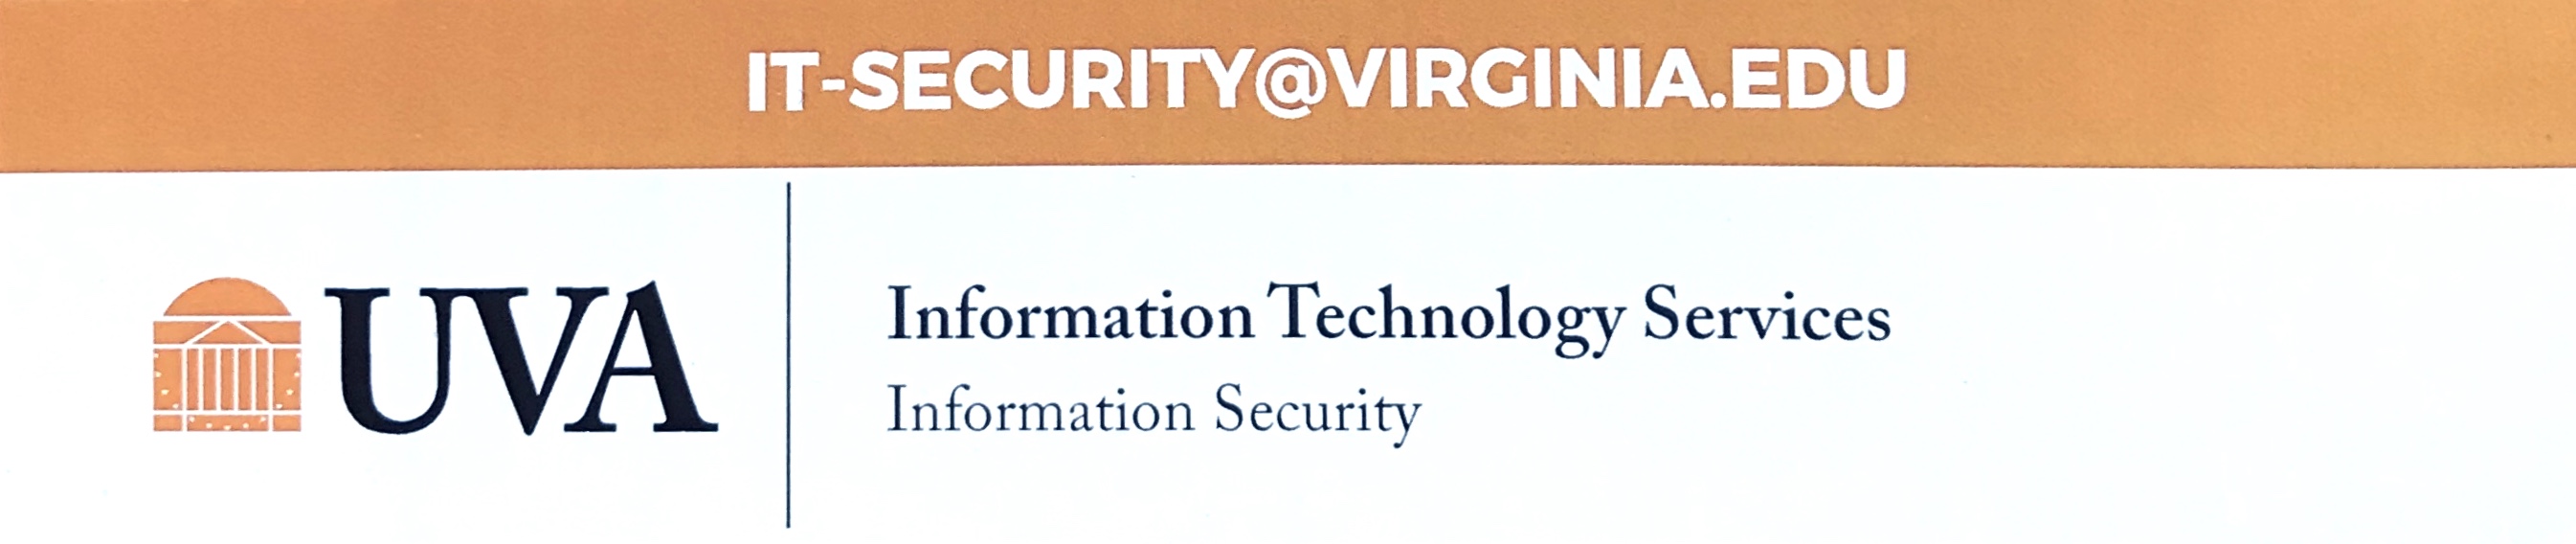 IT-Security Logo